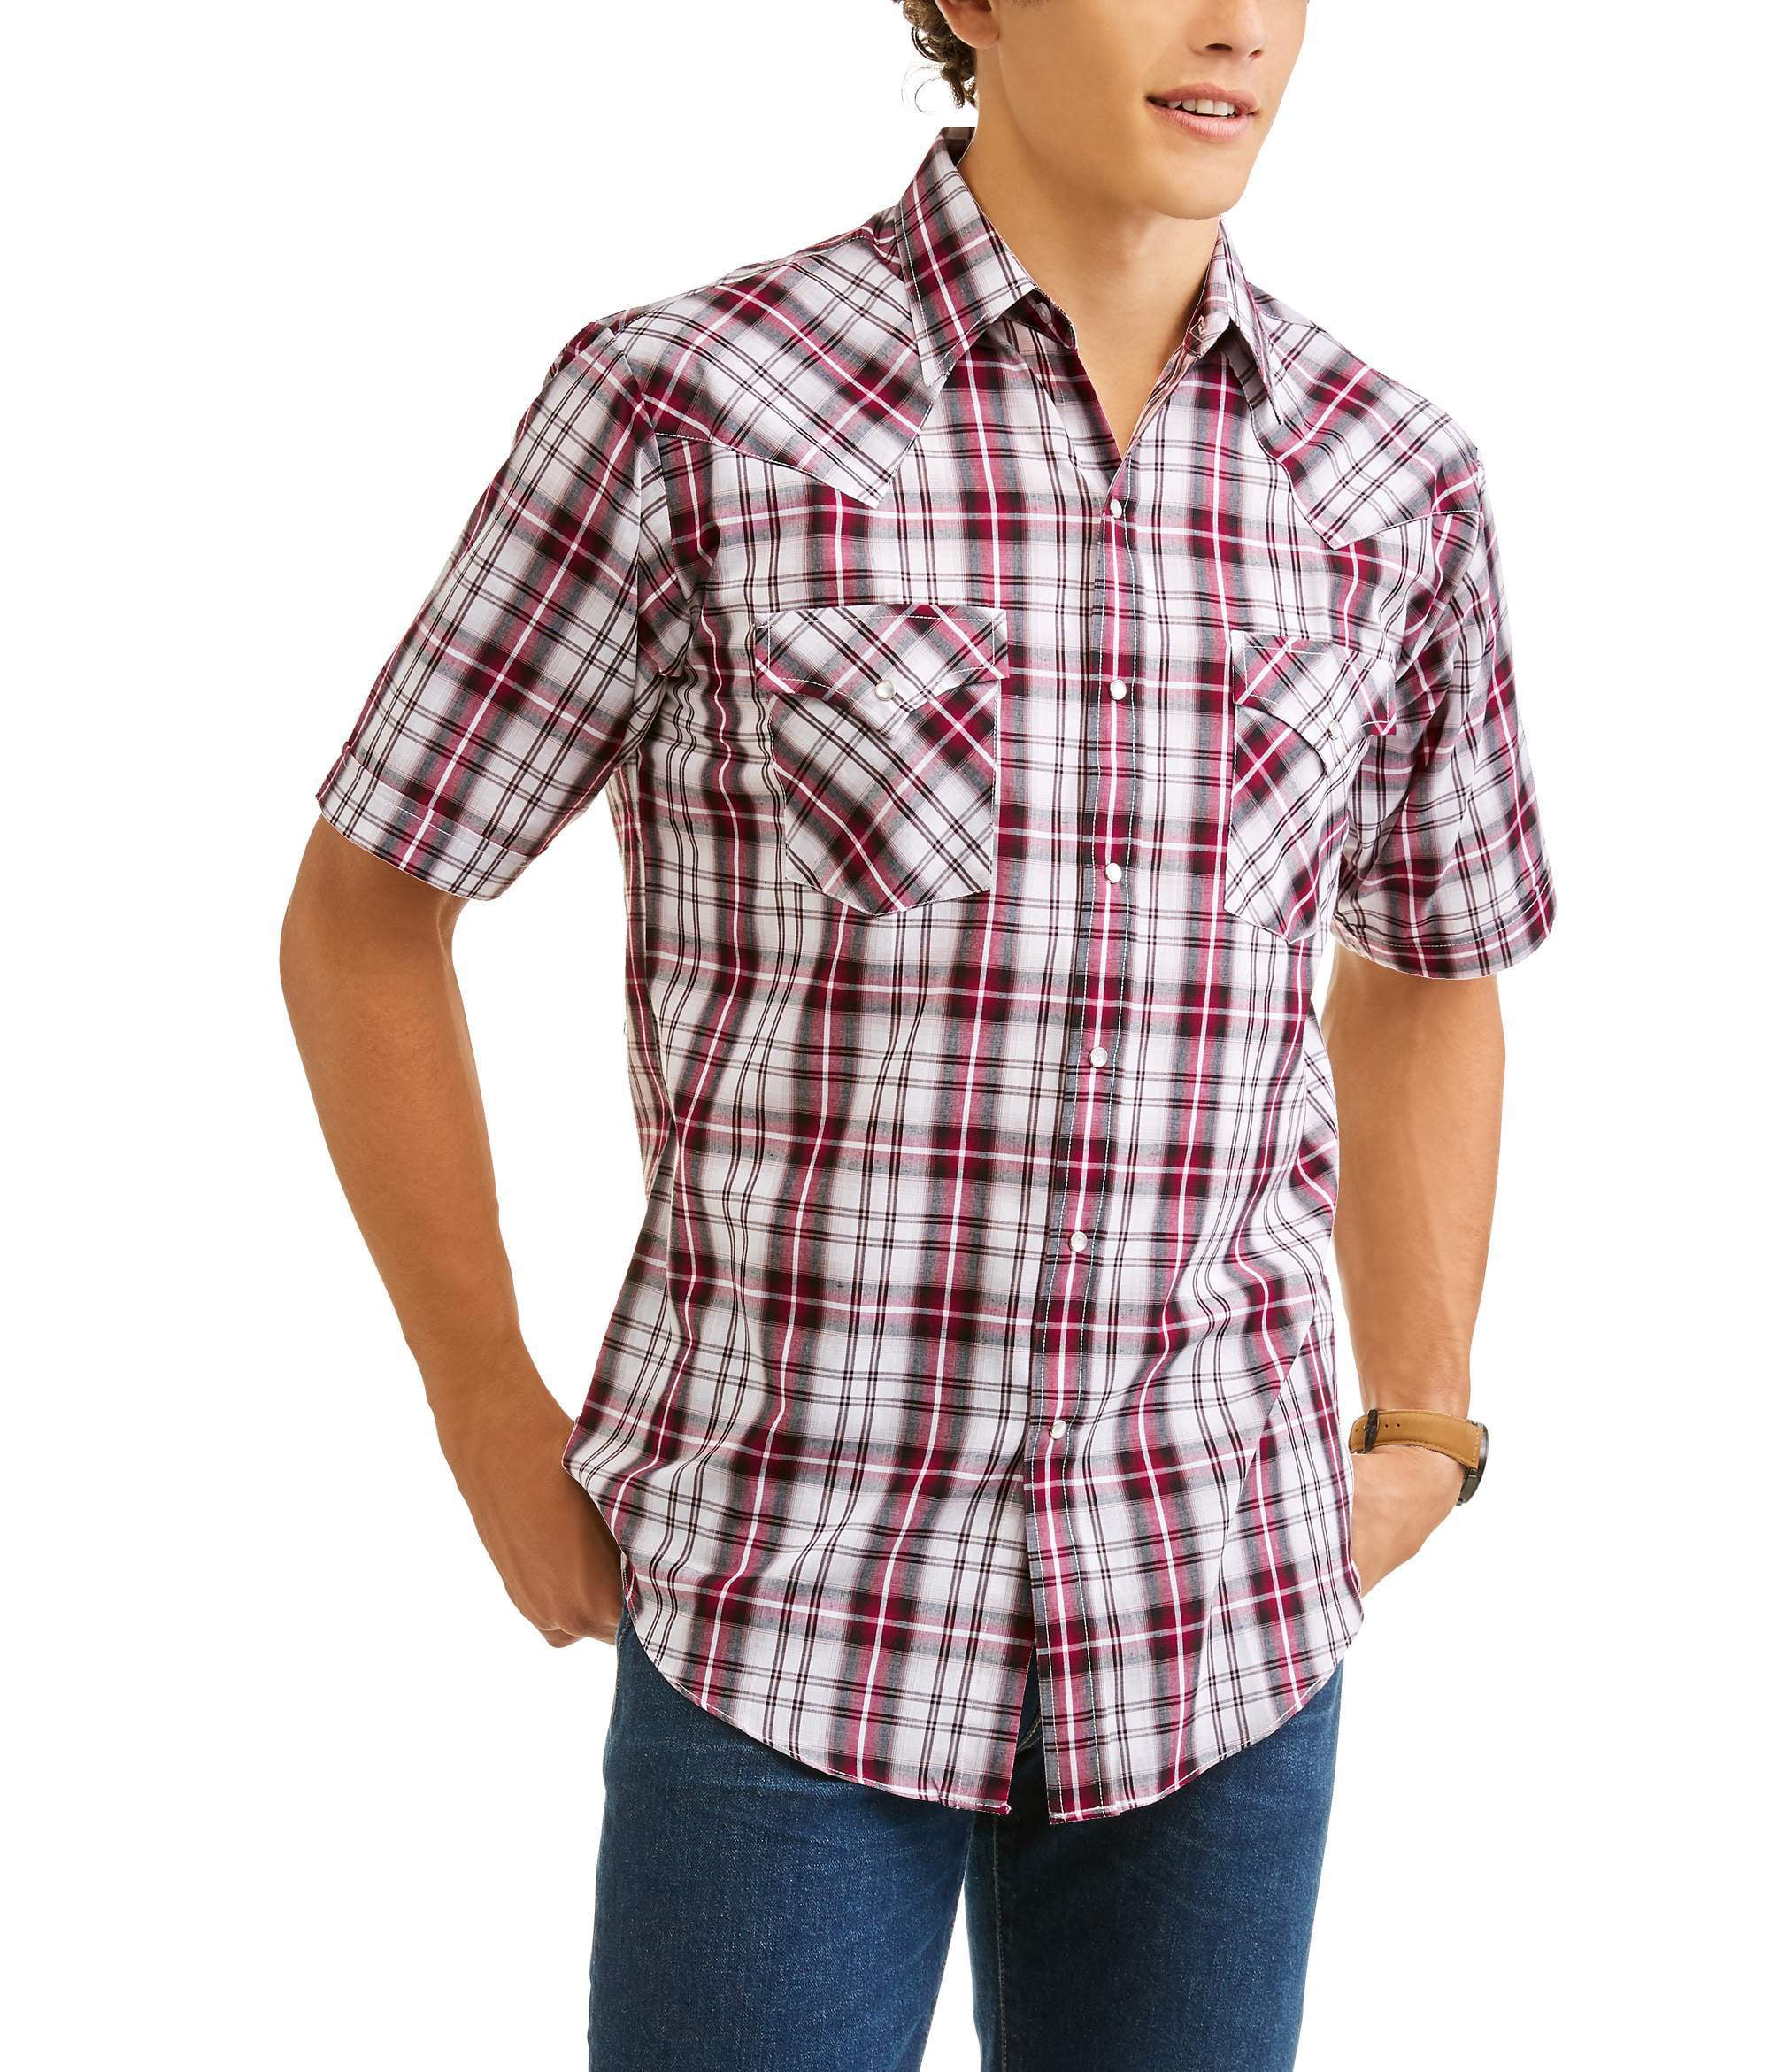 Plains Big men's short sleeve plaid western shirt - Walmart.com